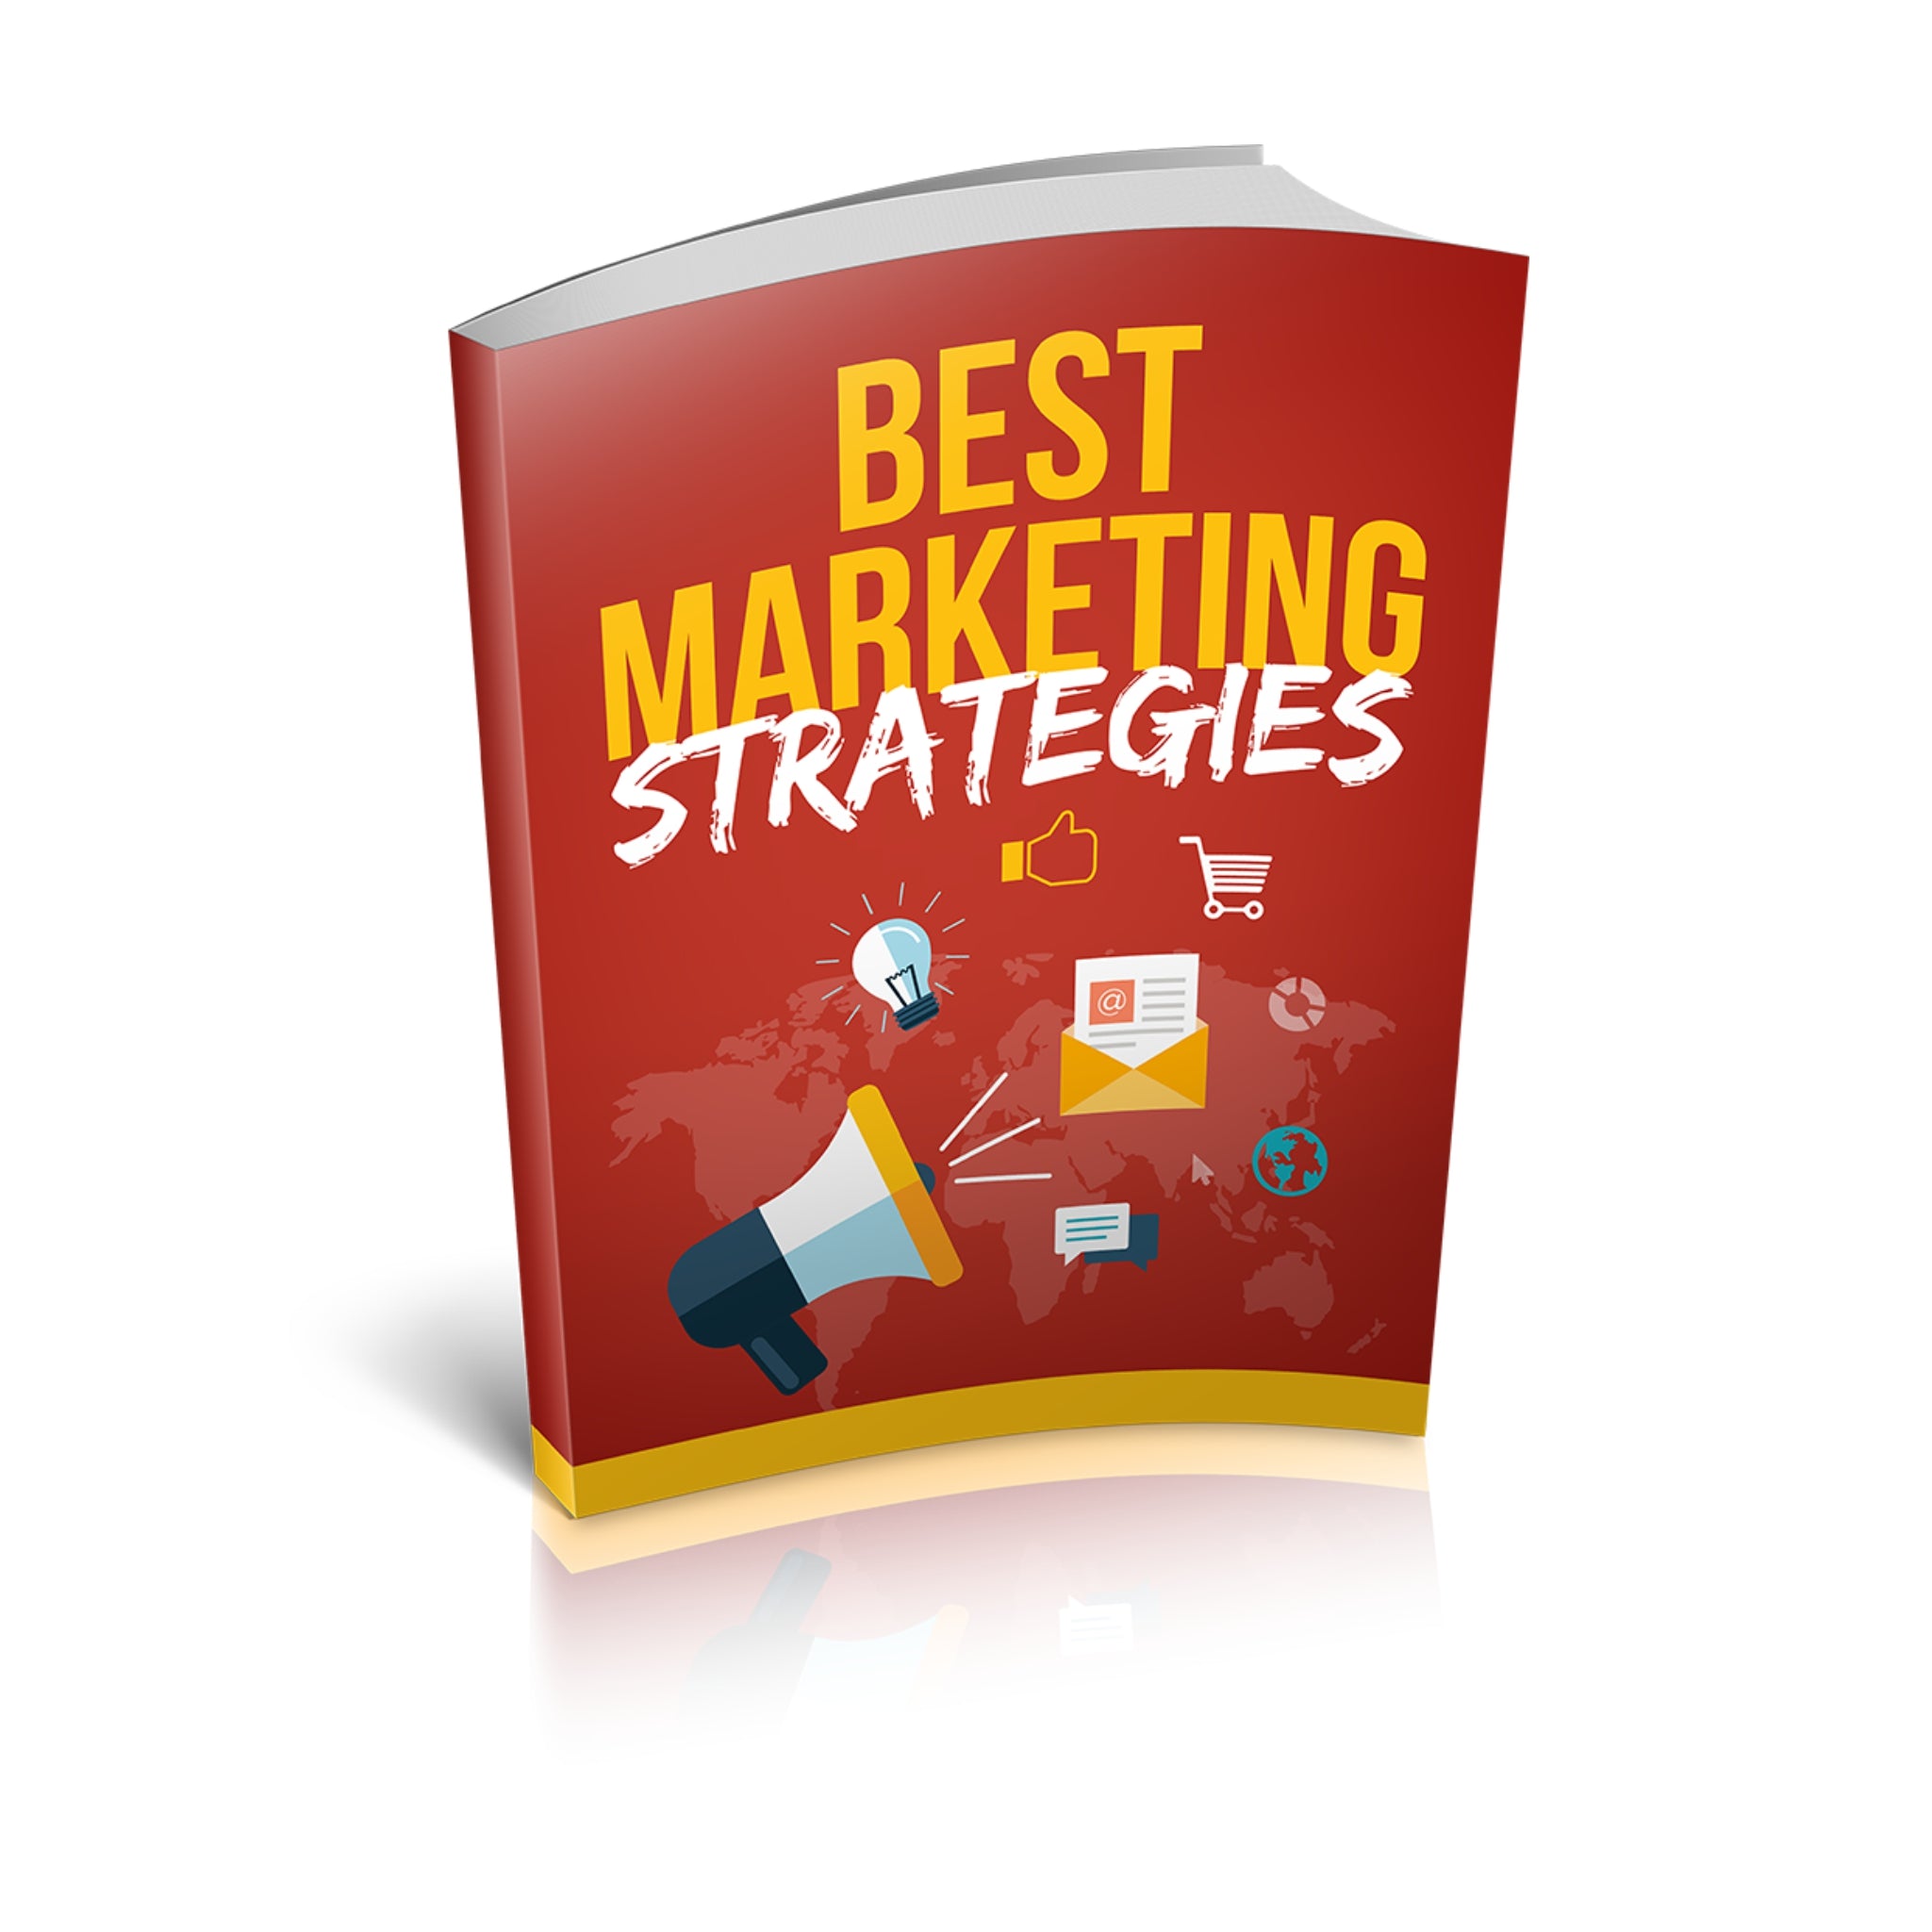 The Best Marketing Strategies Ebook